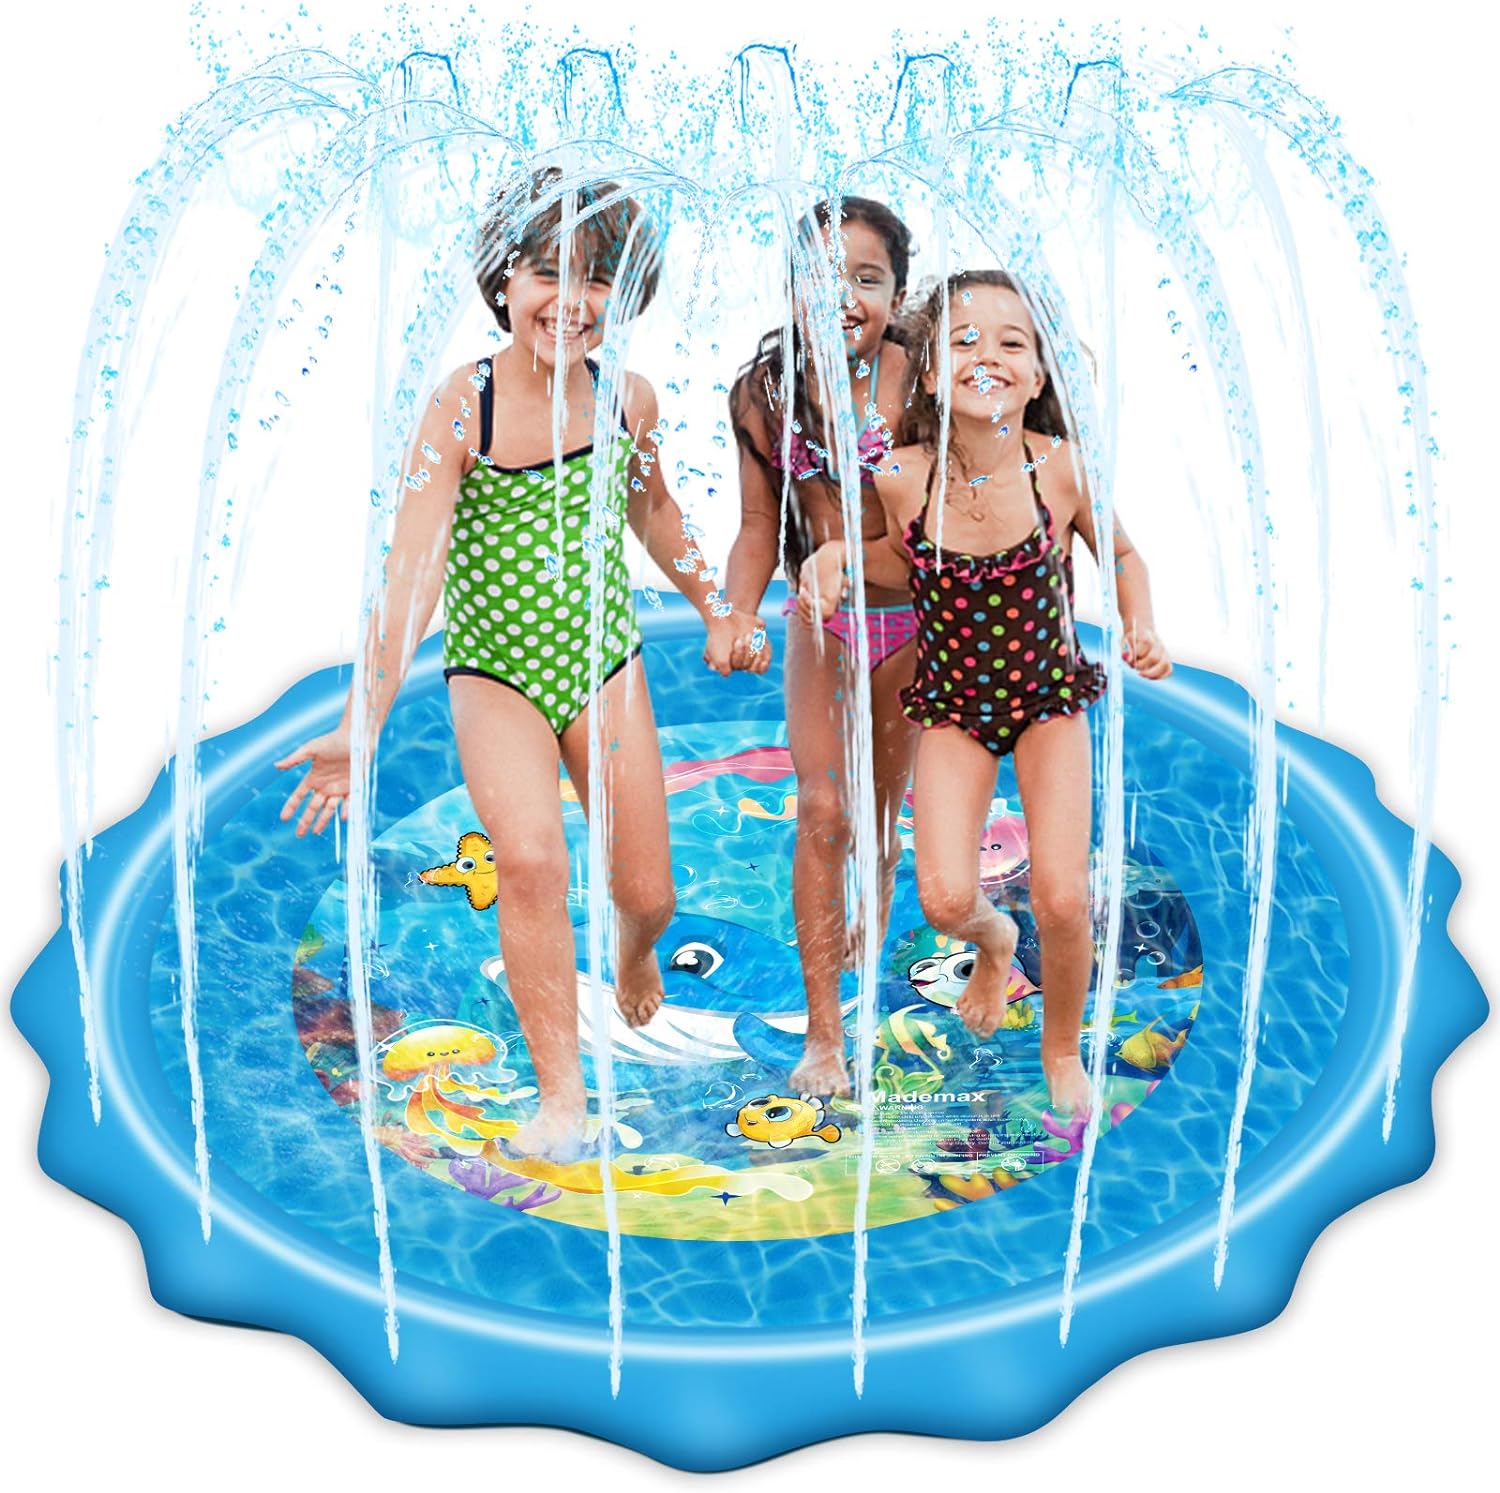 Mademax Upgraded 79 Splash Pad, Sprinkler & Splash Play Mat, Inflatable Summer Outdoor Sprinkler Pad Water Toys Fun for Children, Infants, Toddlers, Boys, Girls and Kids